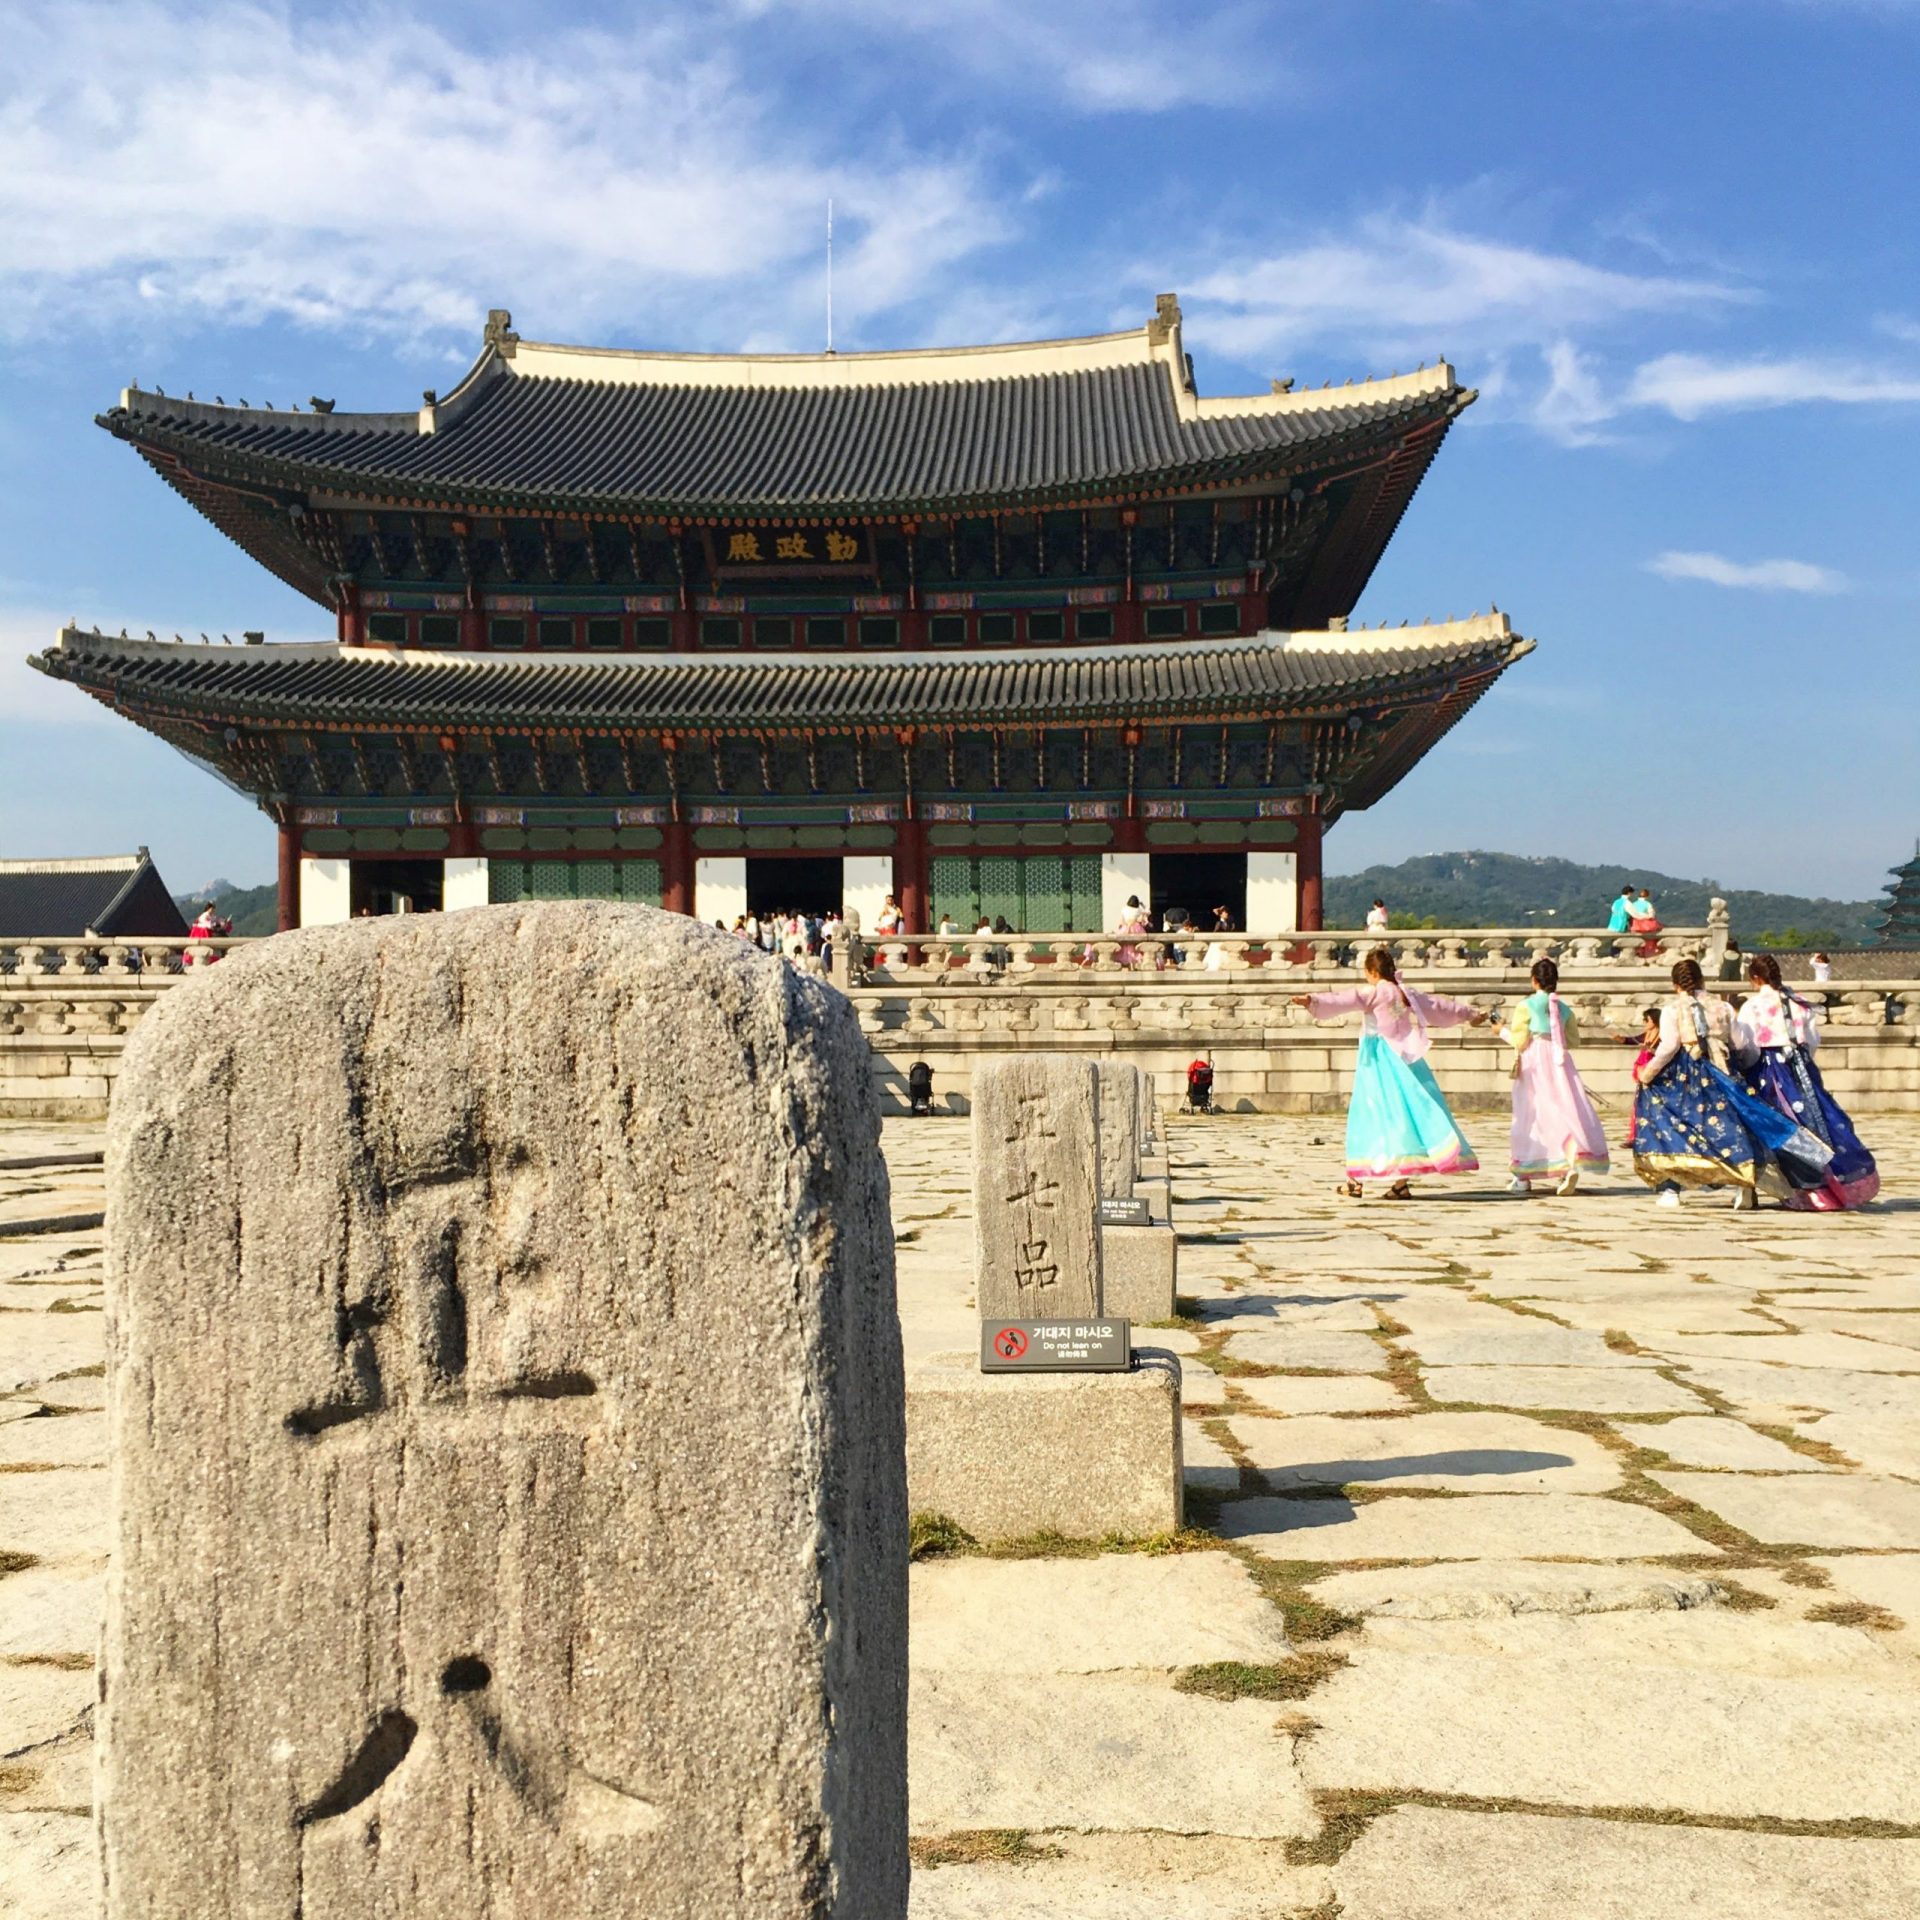 gyeongbokgung palace scaled - Travel Contests: June 20, 2018 - Seoul, the Caribbean, San Francisco, & more